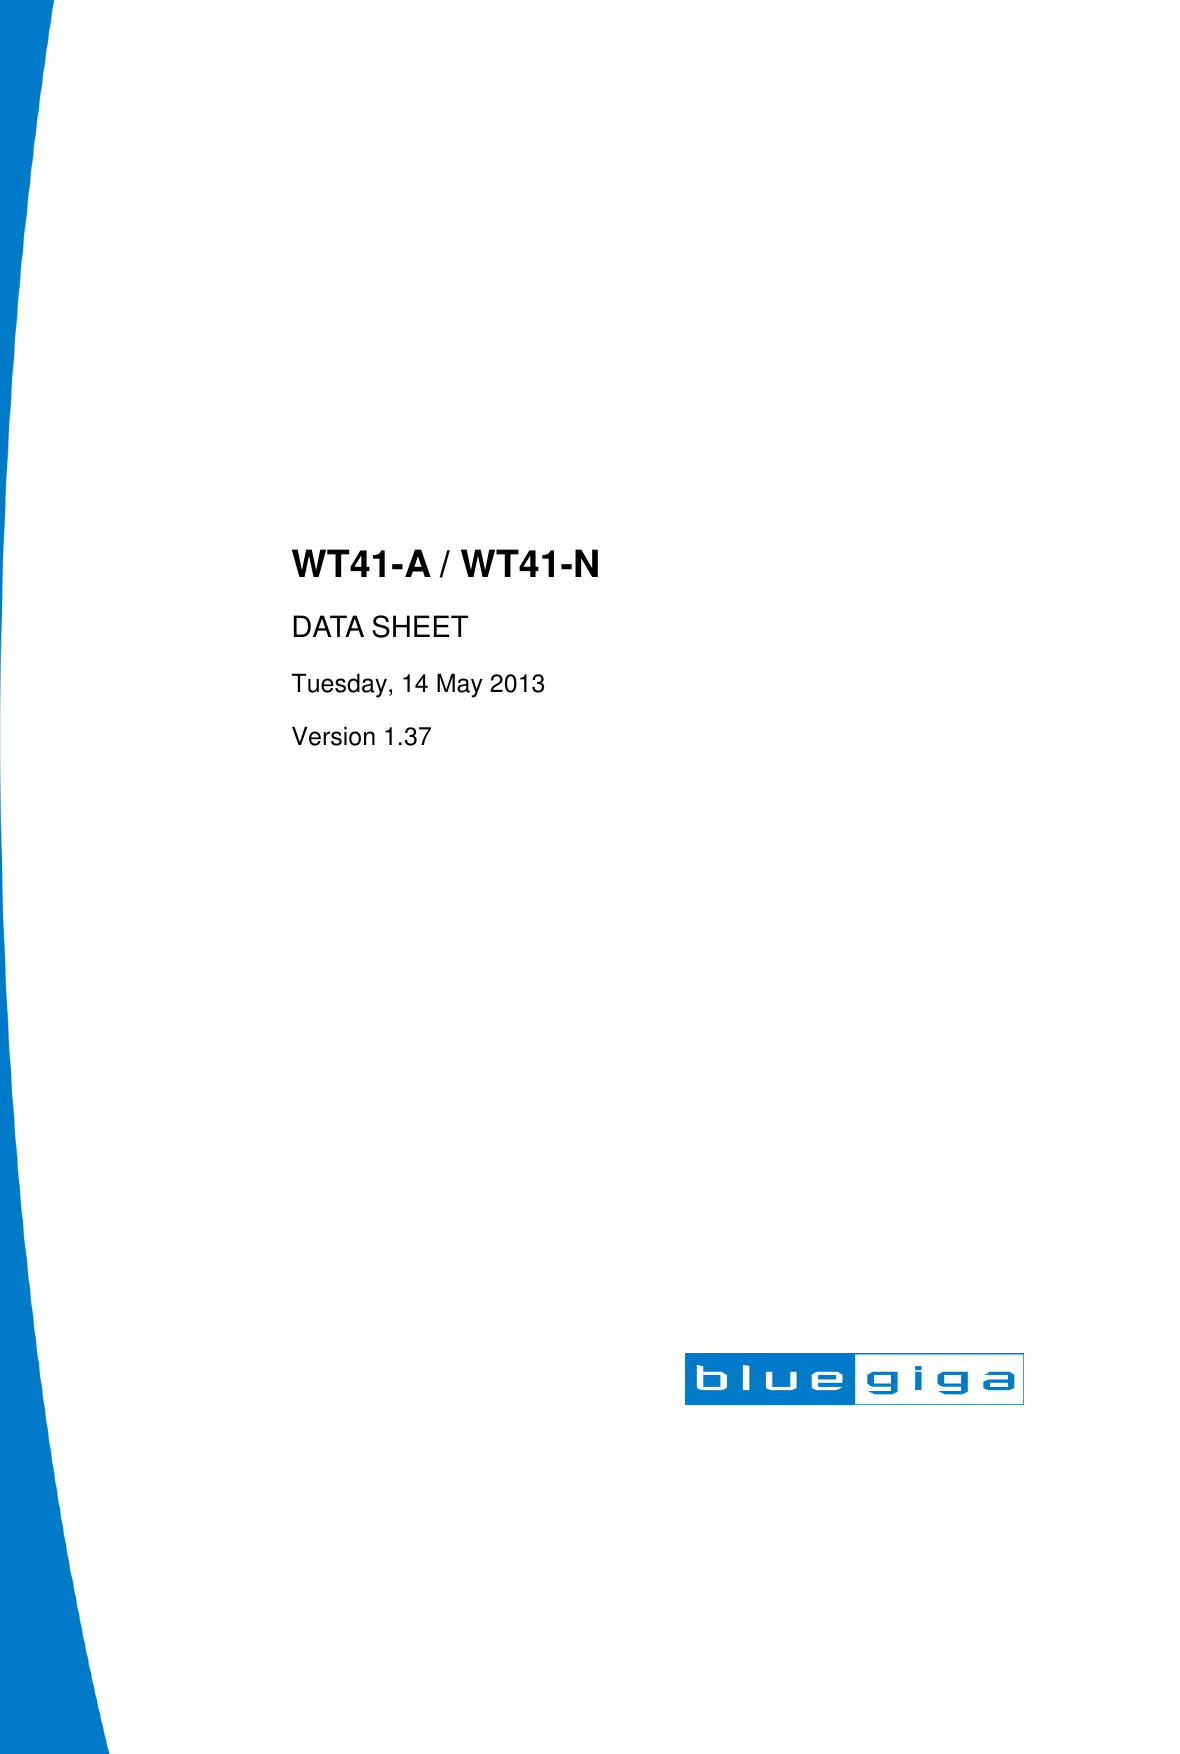                        WT41-A / WT41-N DATA SHEET Tuesday, 14 May 2013 Version 1.37  